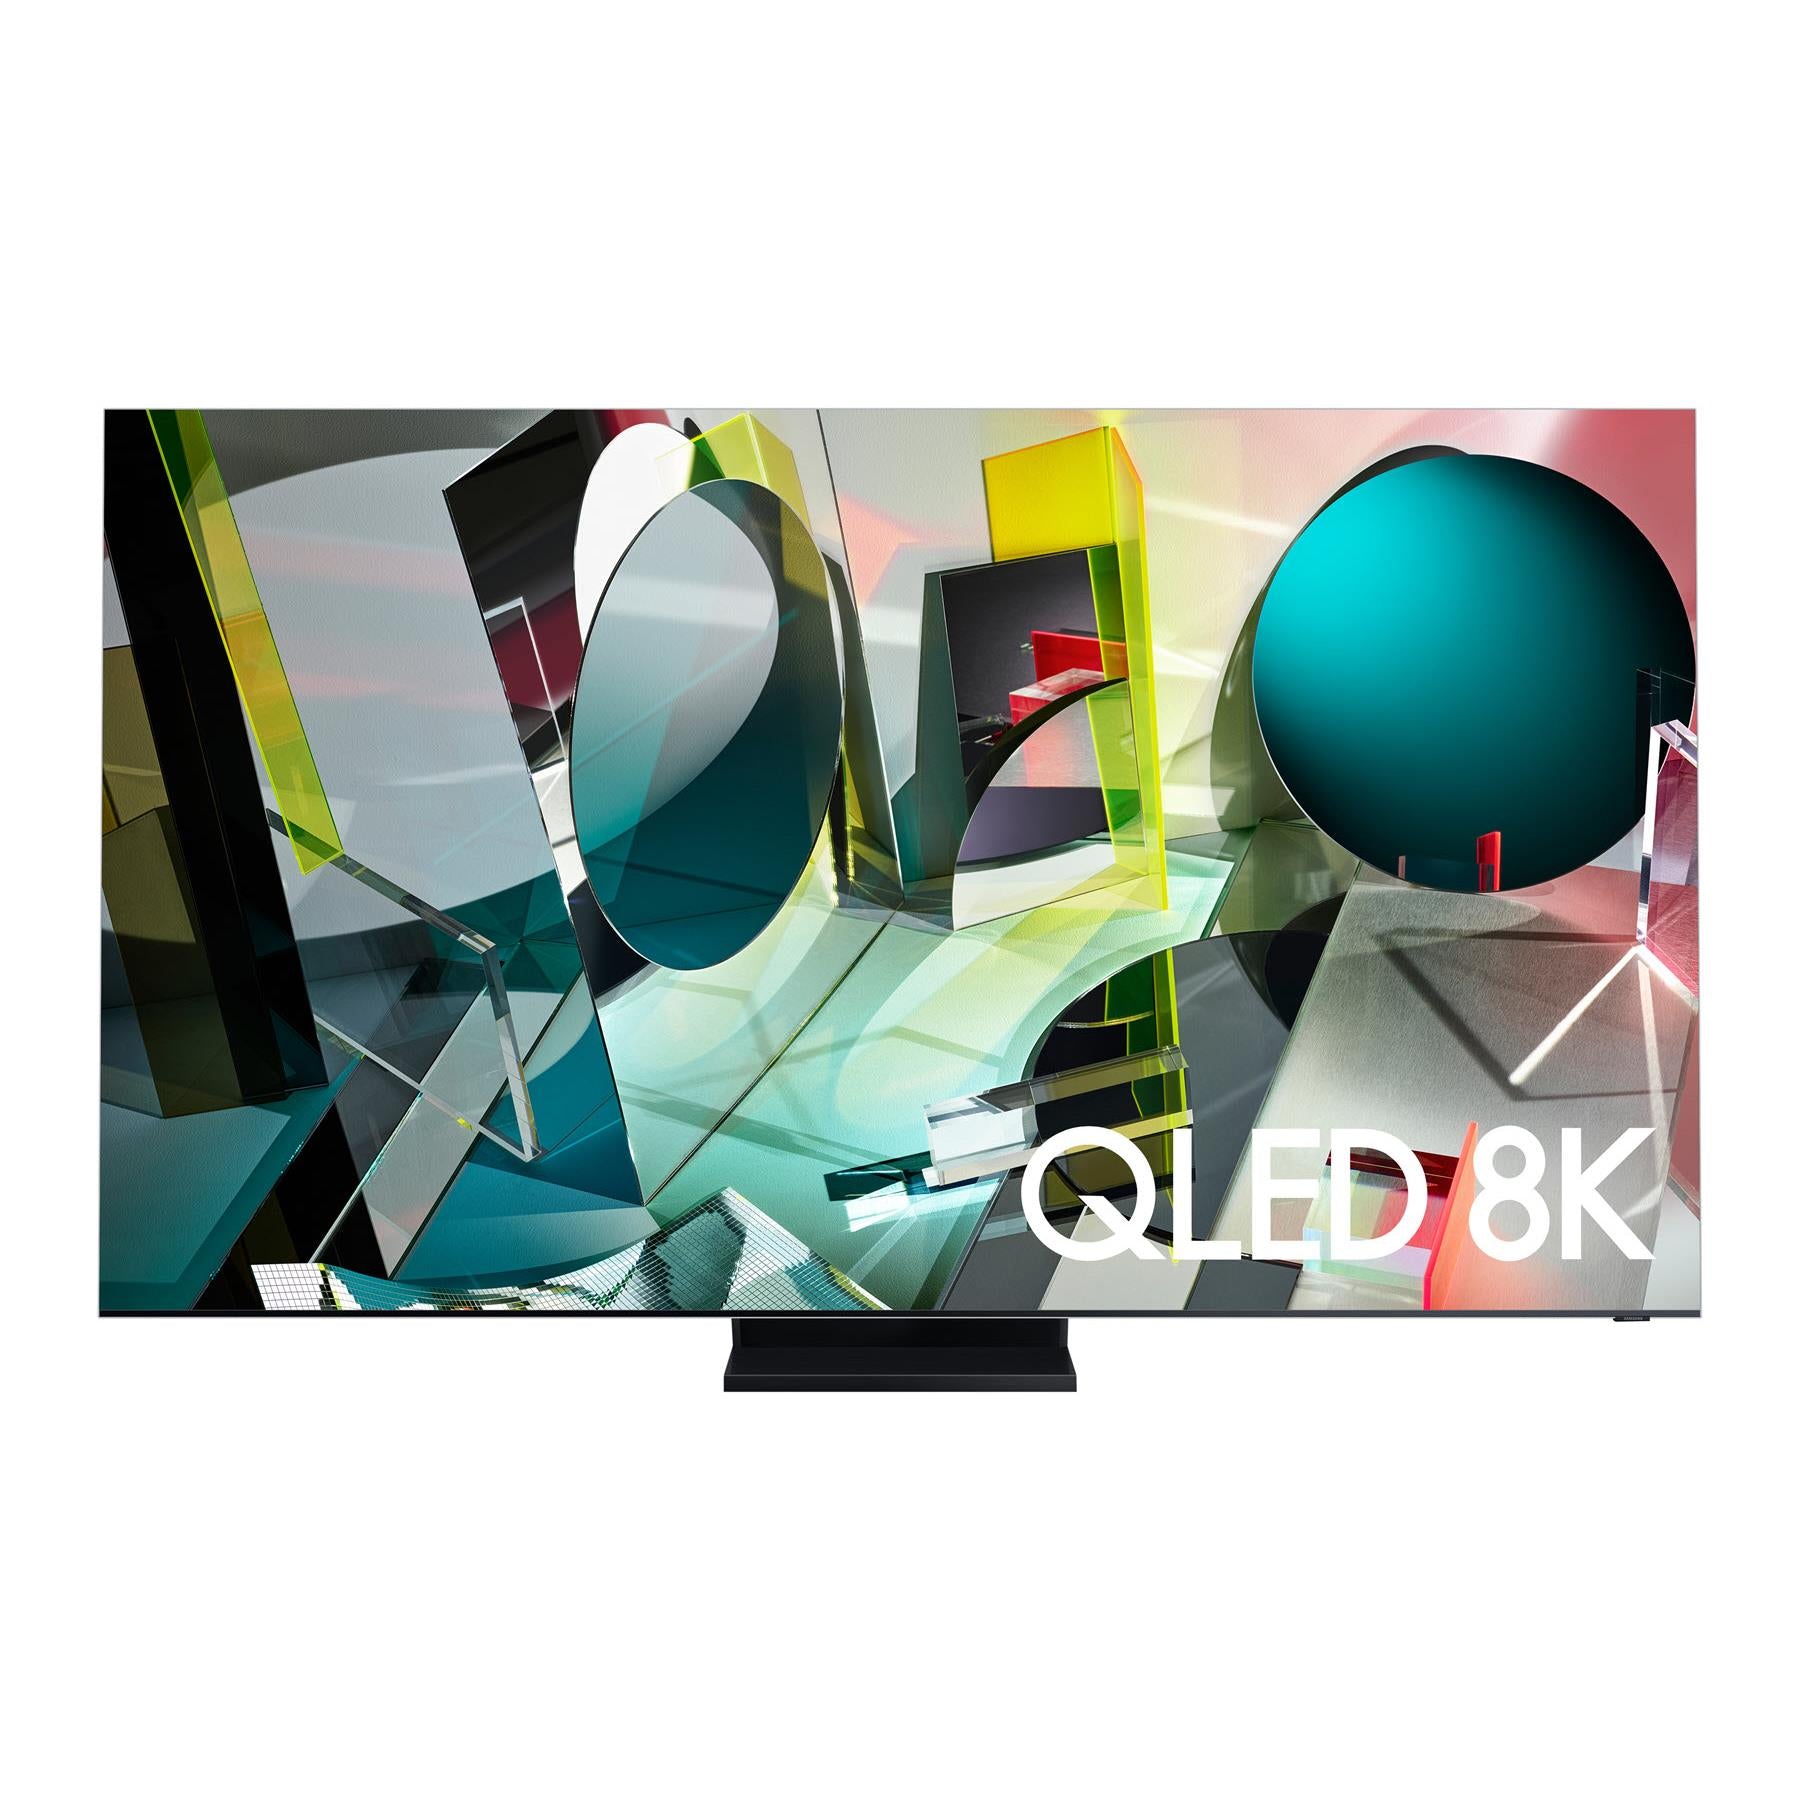 samsung 65" q950t qled ultra hd 8k smart tv 2020 [^refurbished]